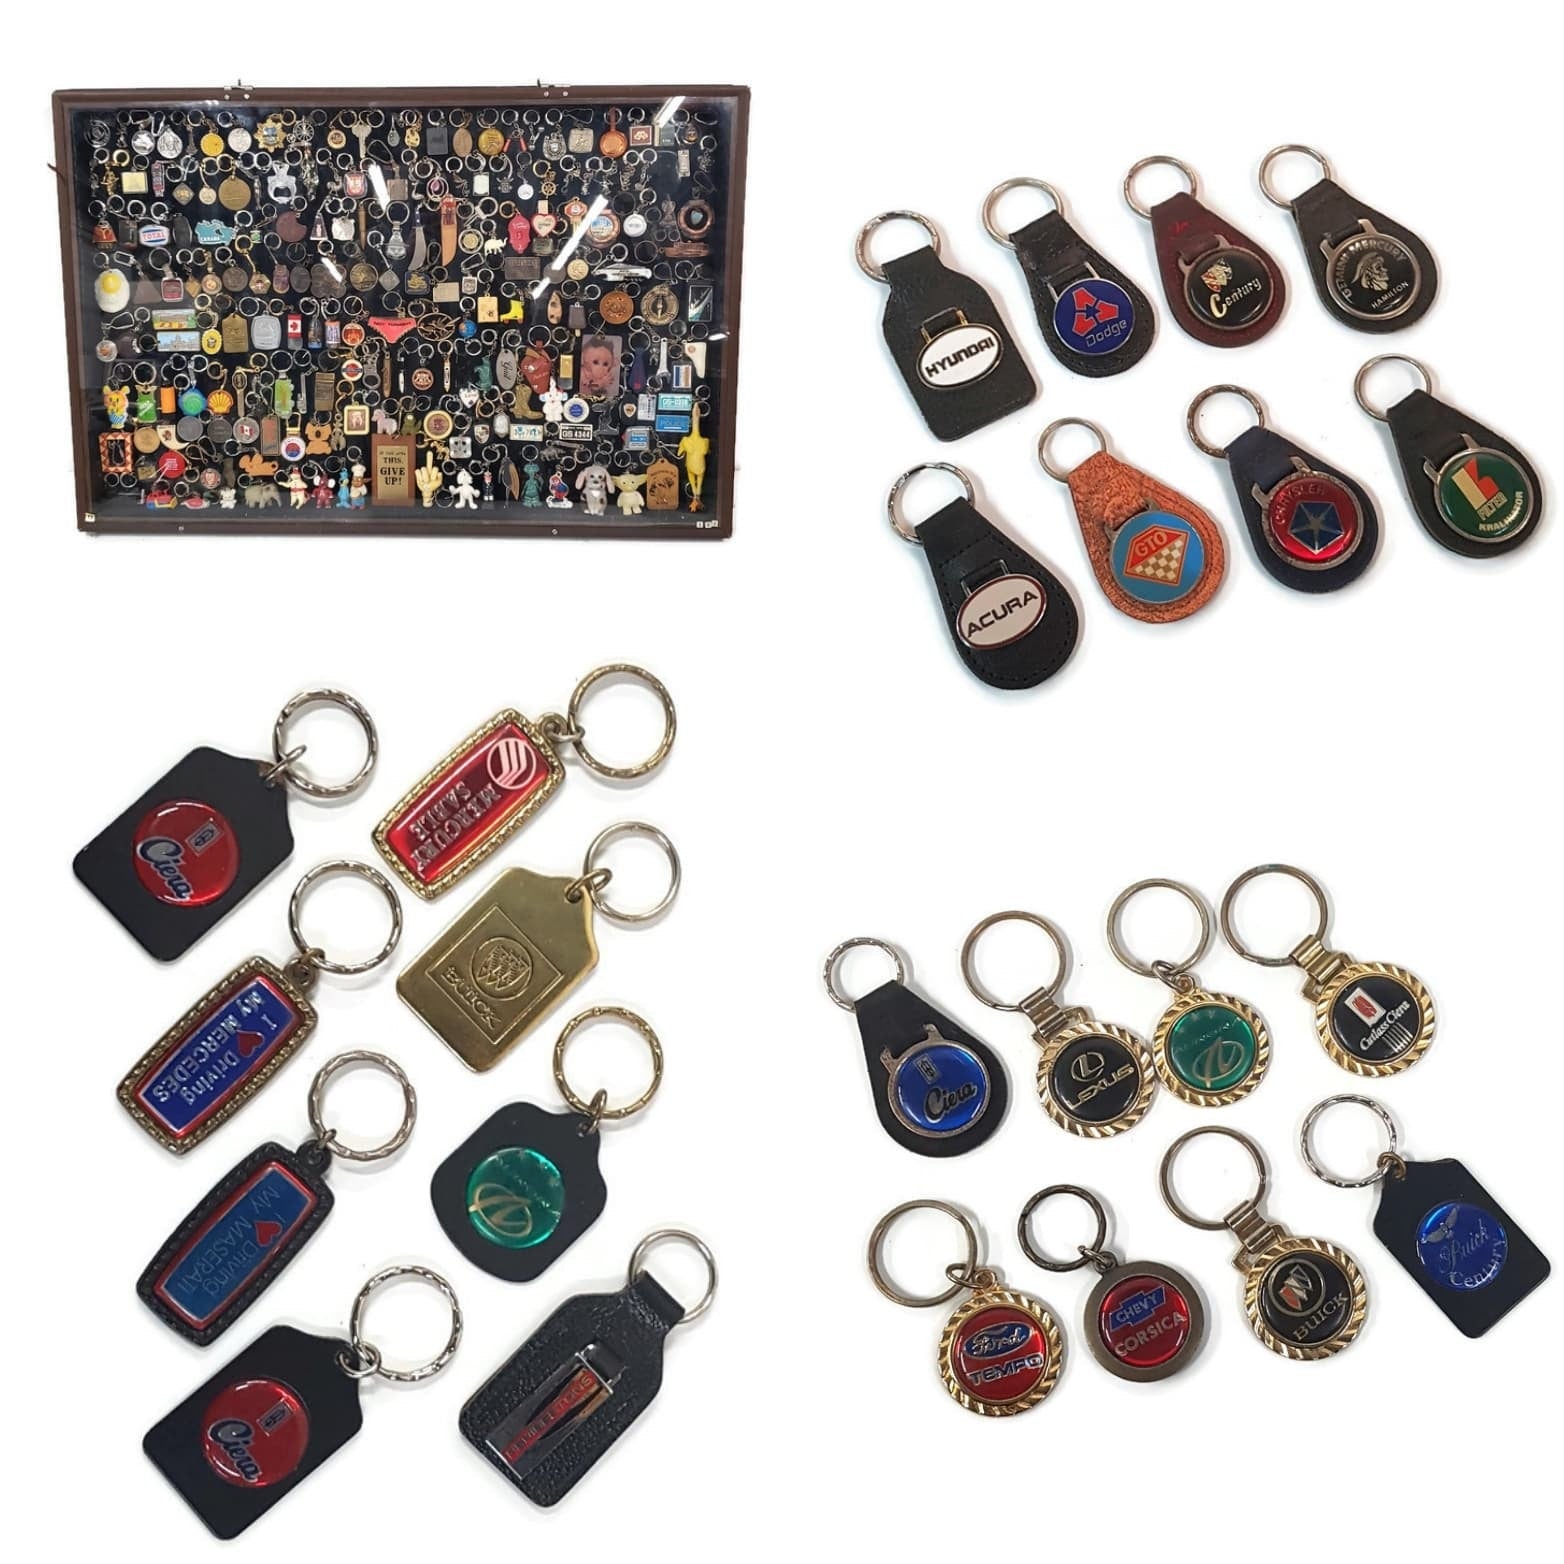 dodge key chain keychain key fob keytag vintage automotove keychain gift collectible